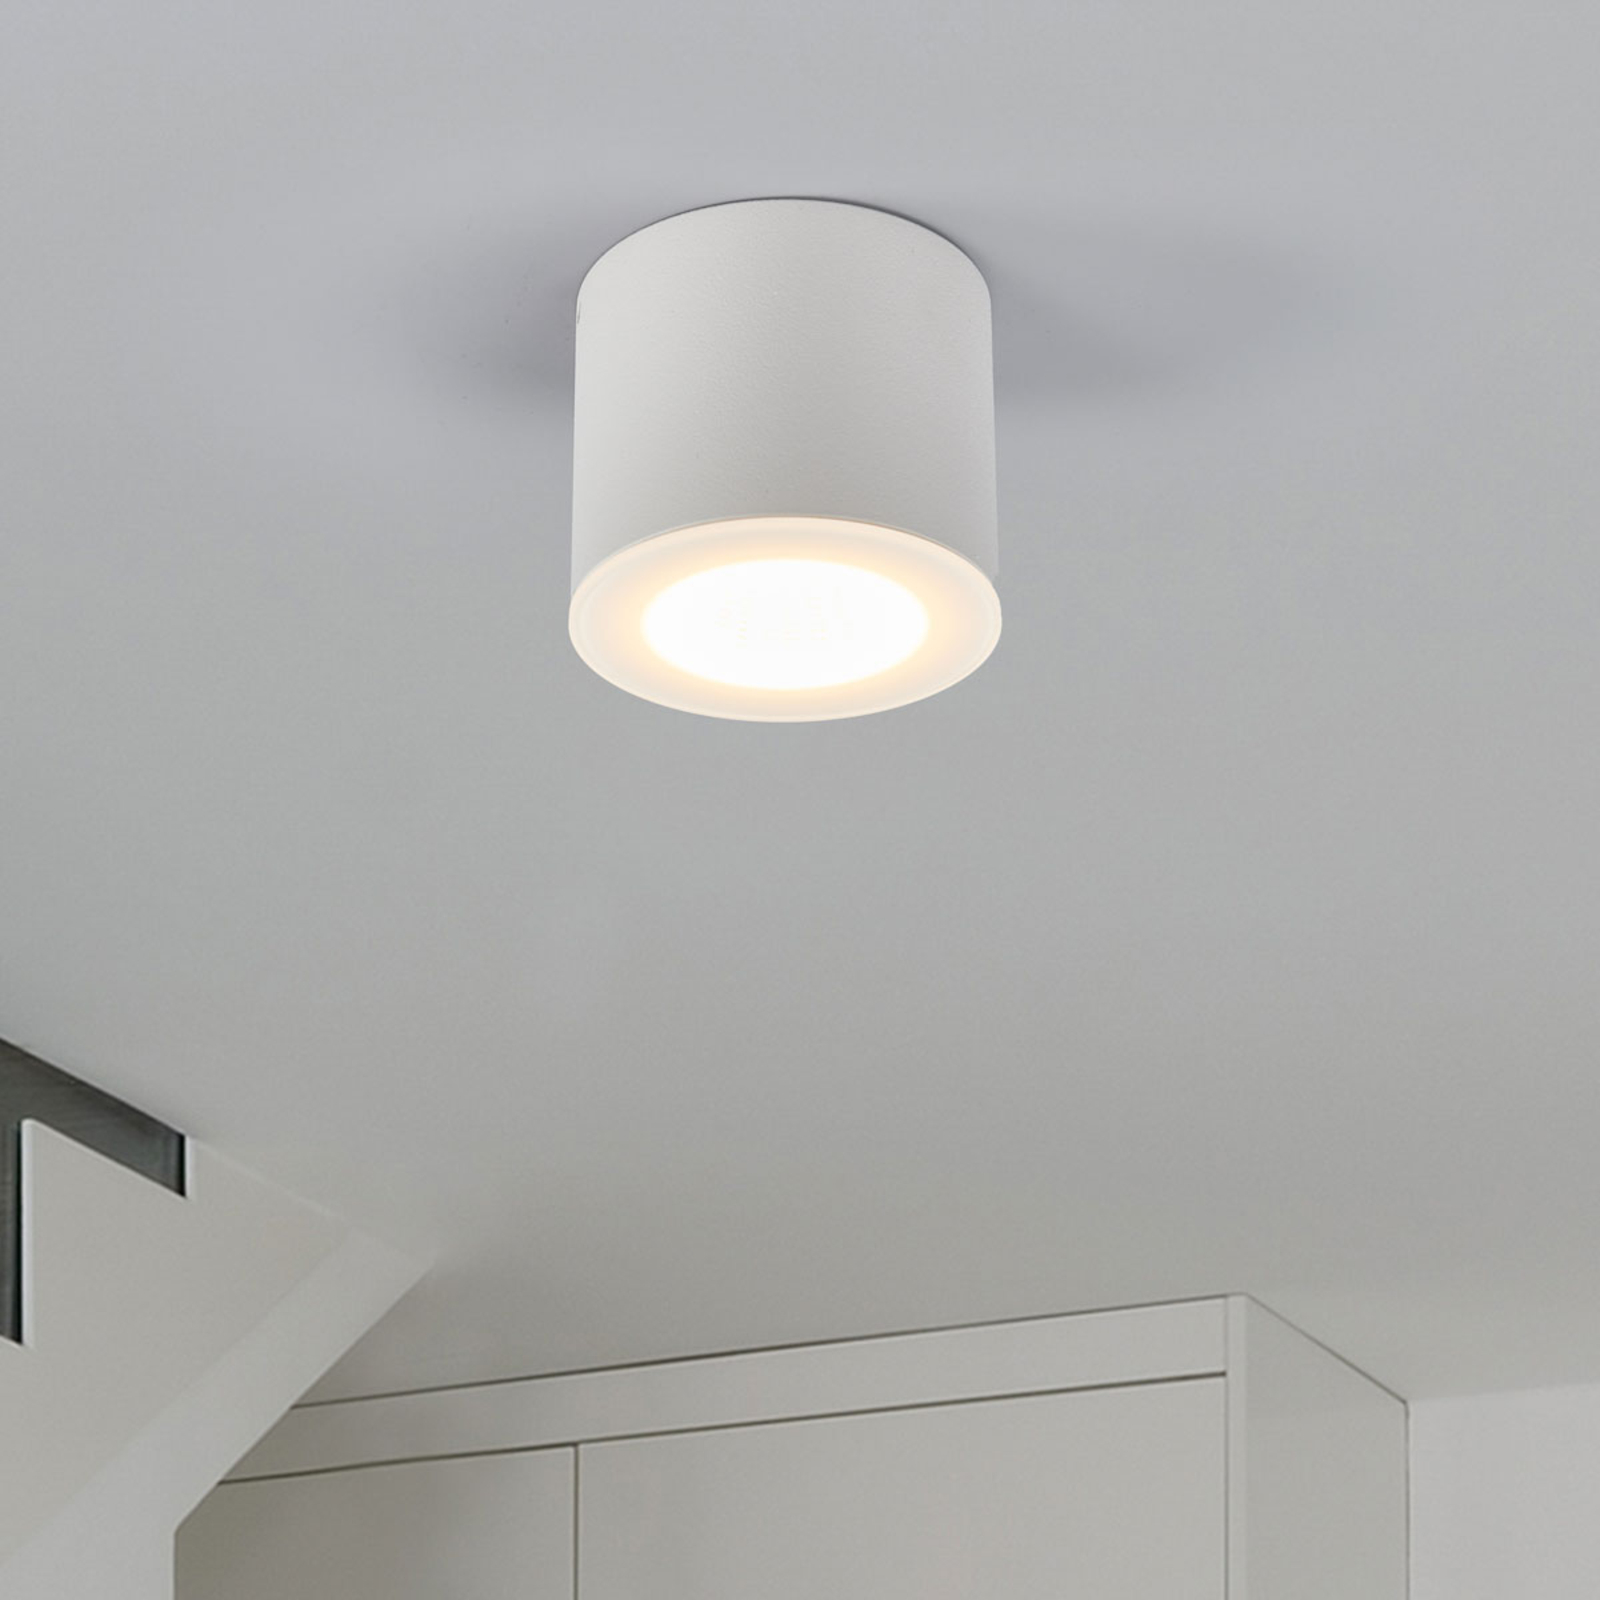 Helestra Oso spot plafond LED, rond, blanc mat